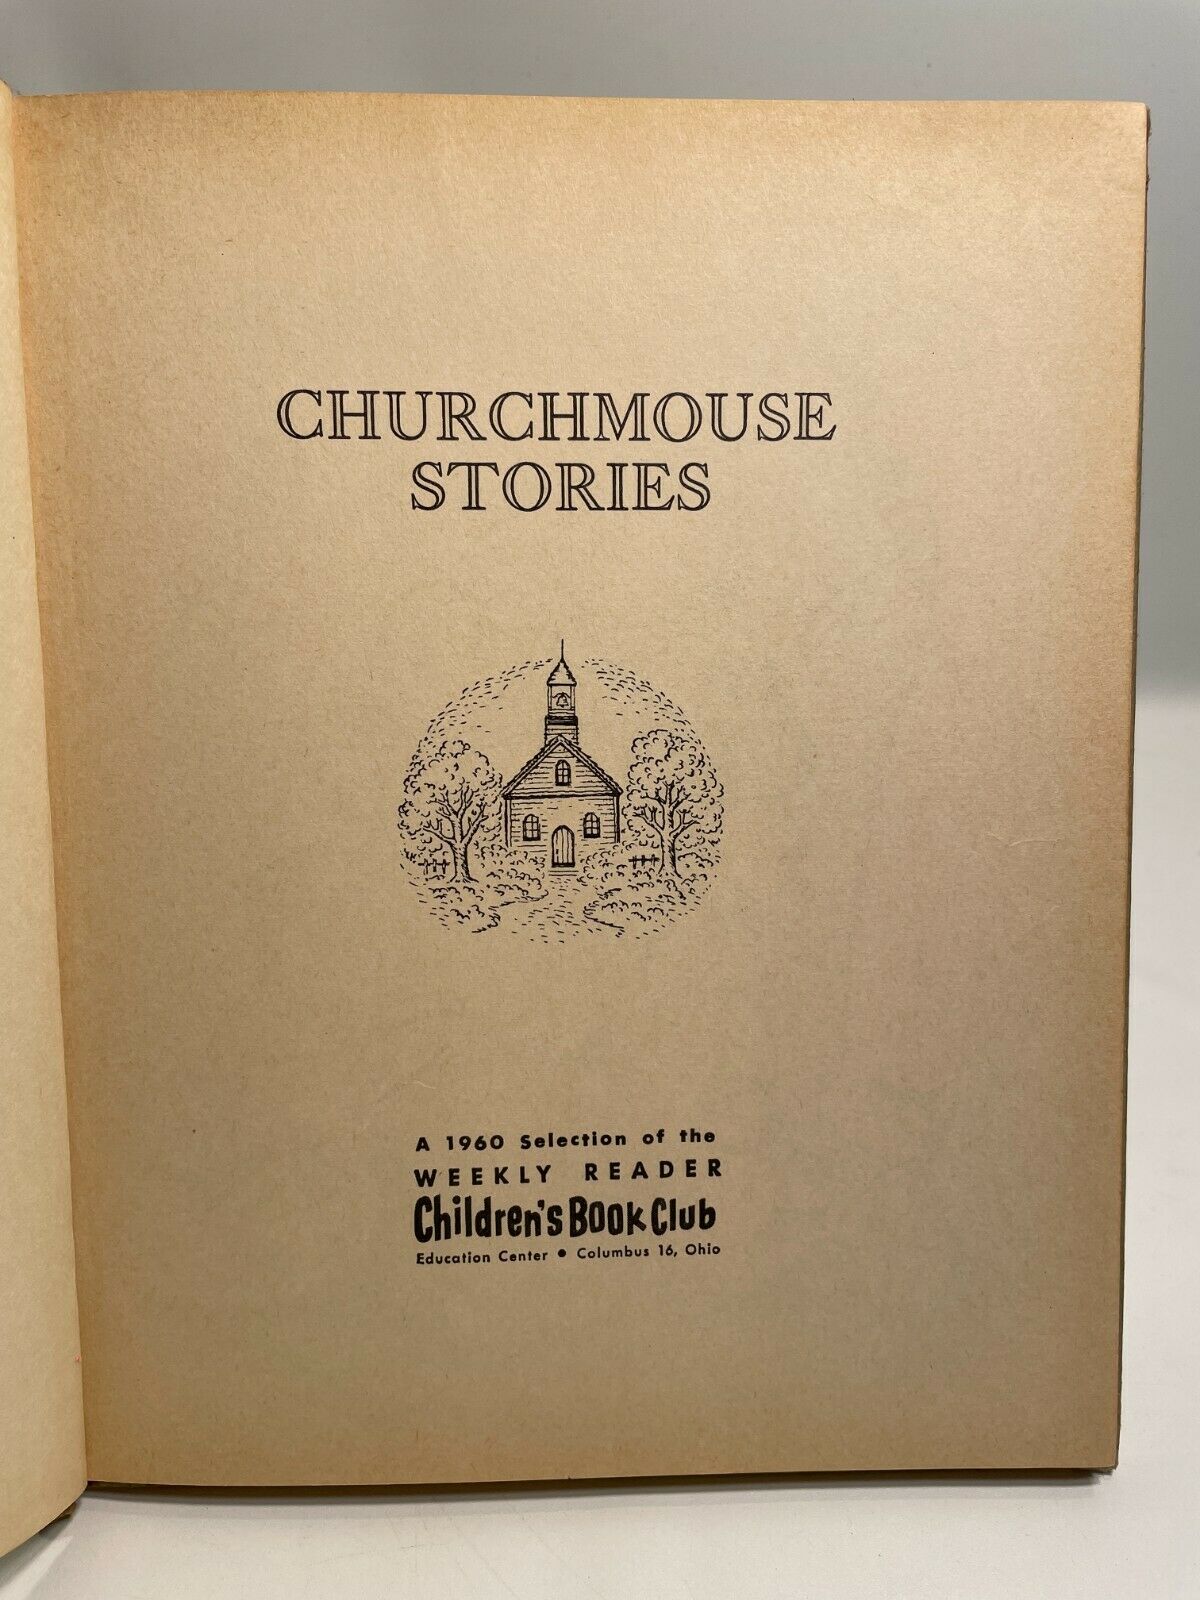 Churchmouse Stories by Margot Austin 1956 Children's Book Club